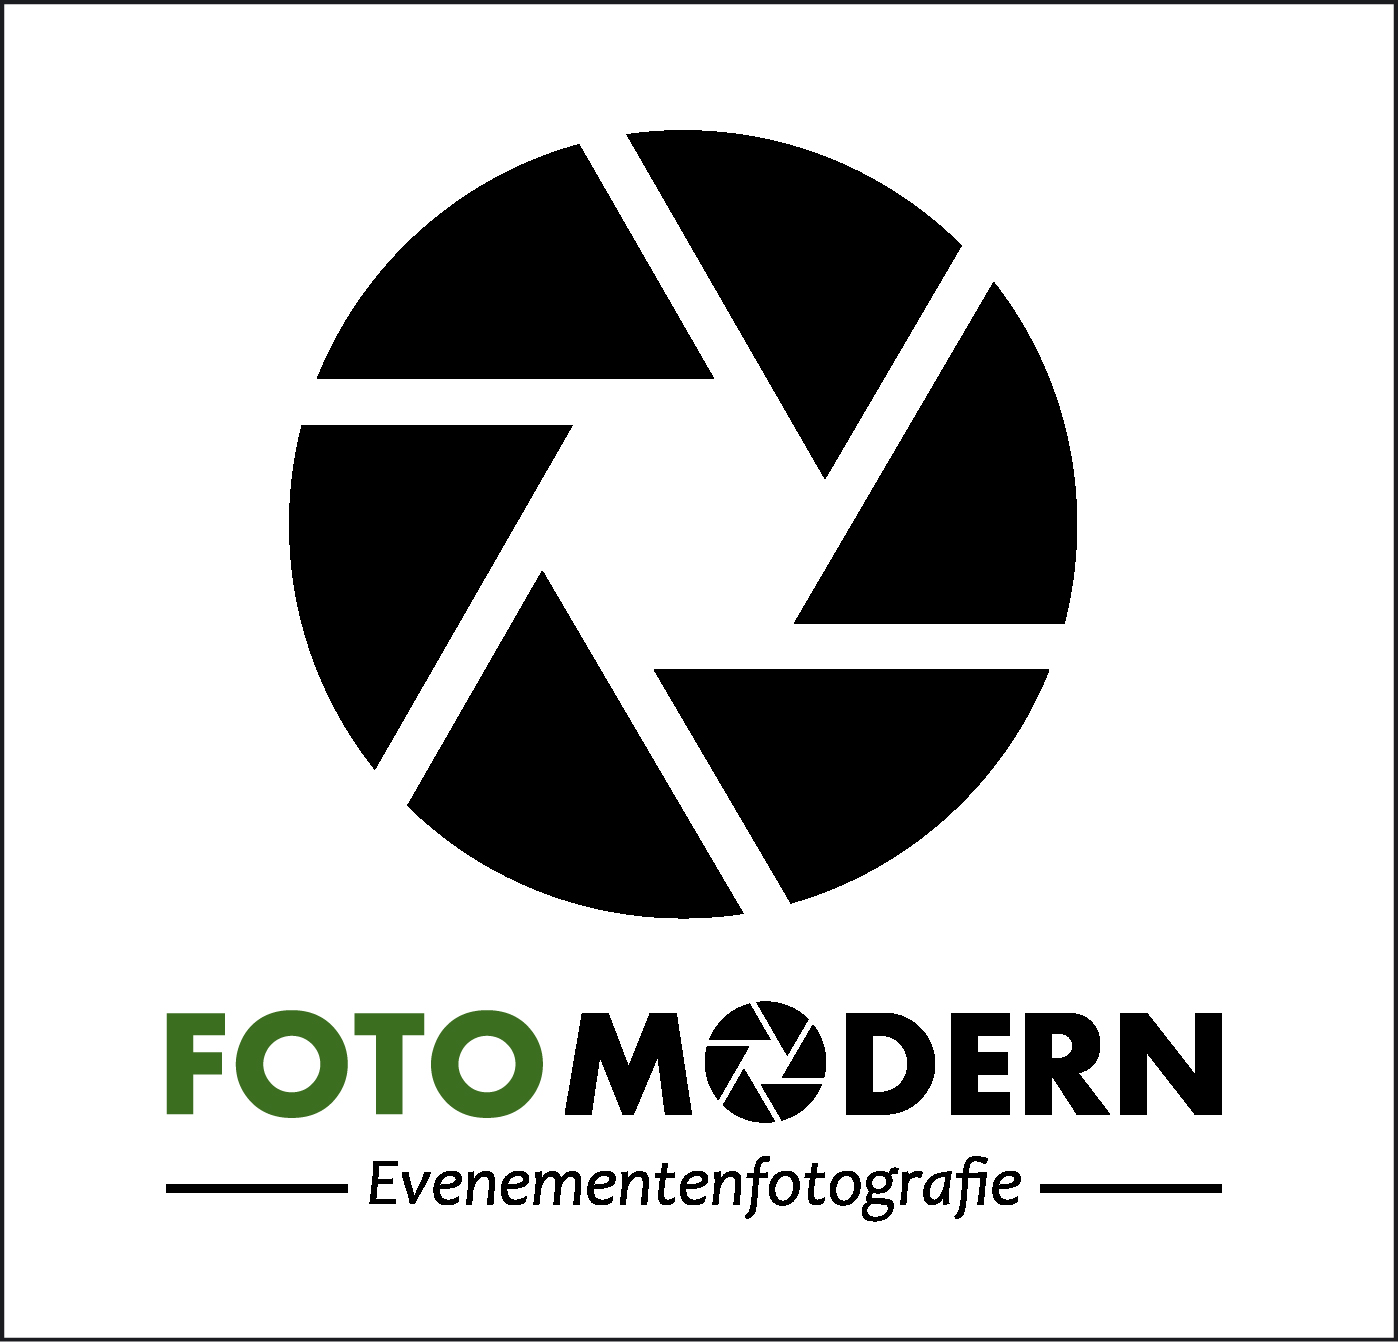 Foto Modern